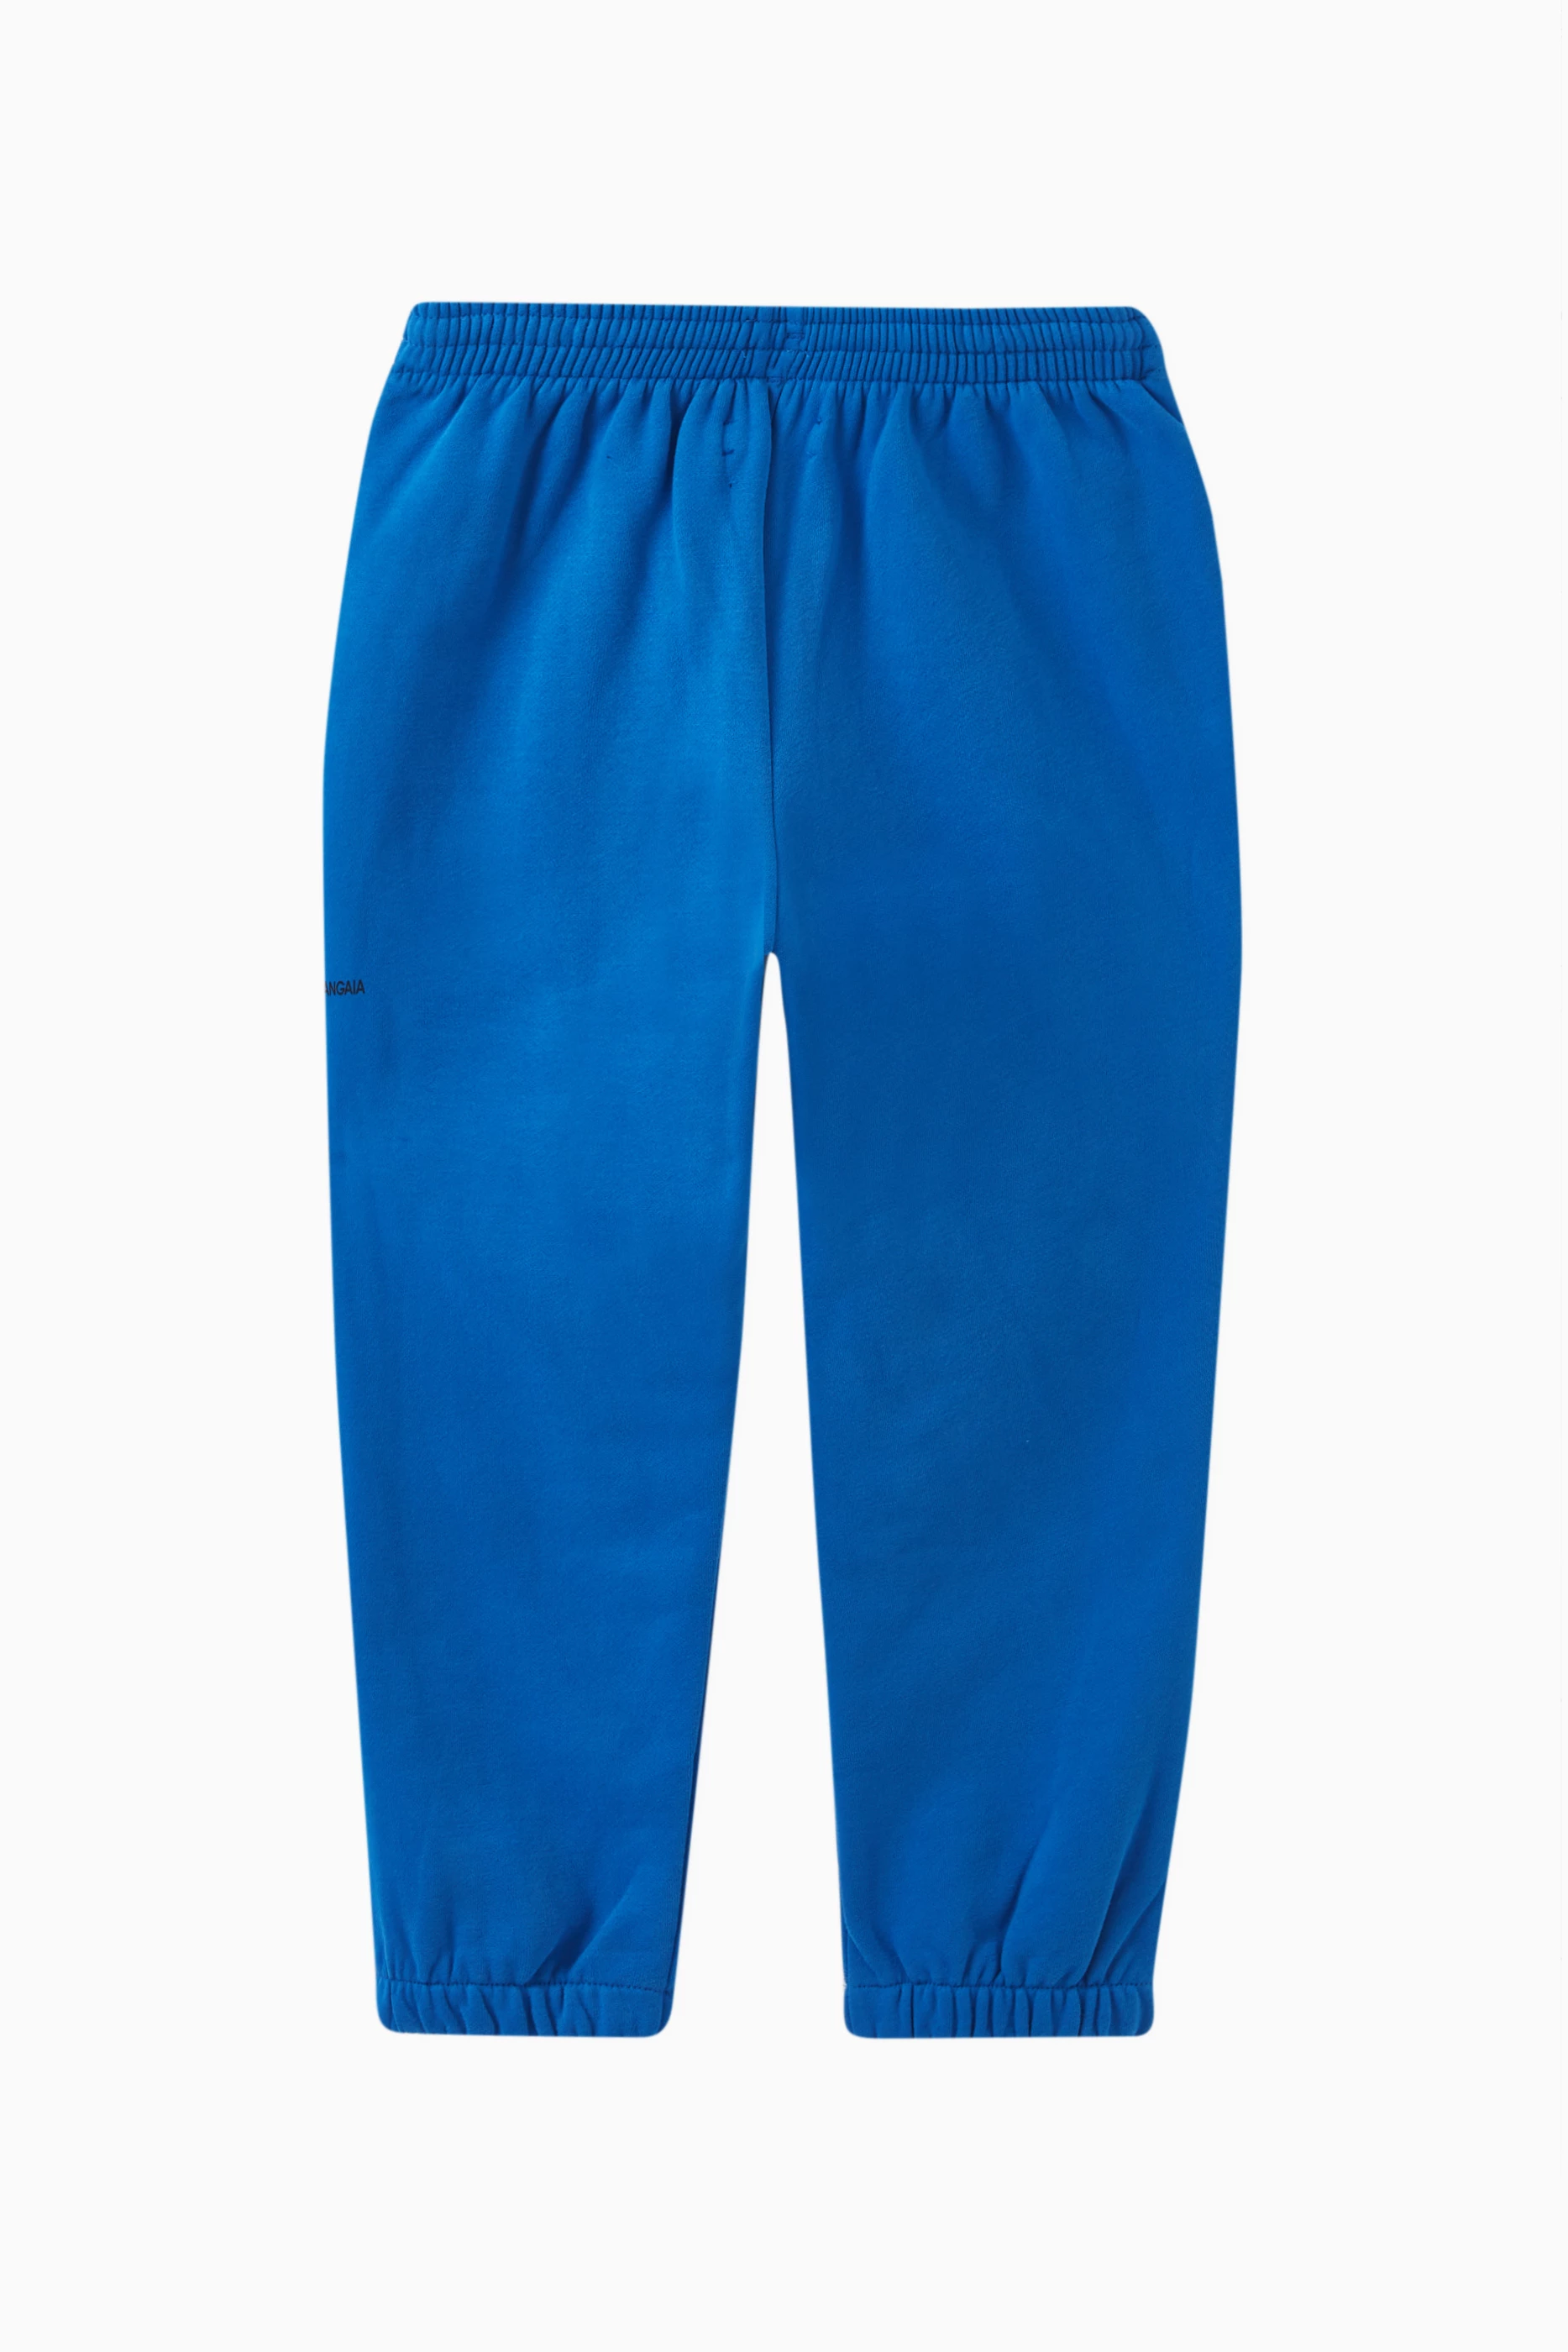 Pangaia 365 Cobalt Blue Sweatpants